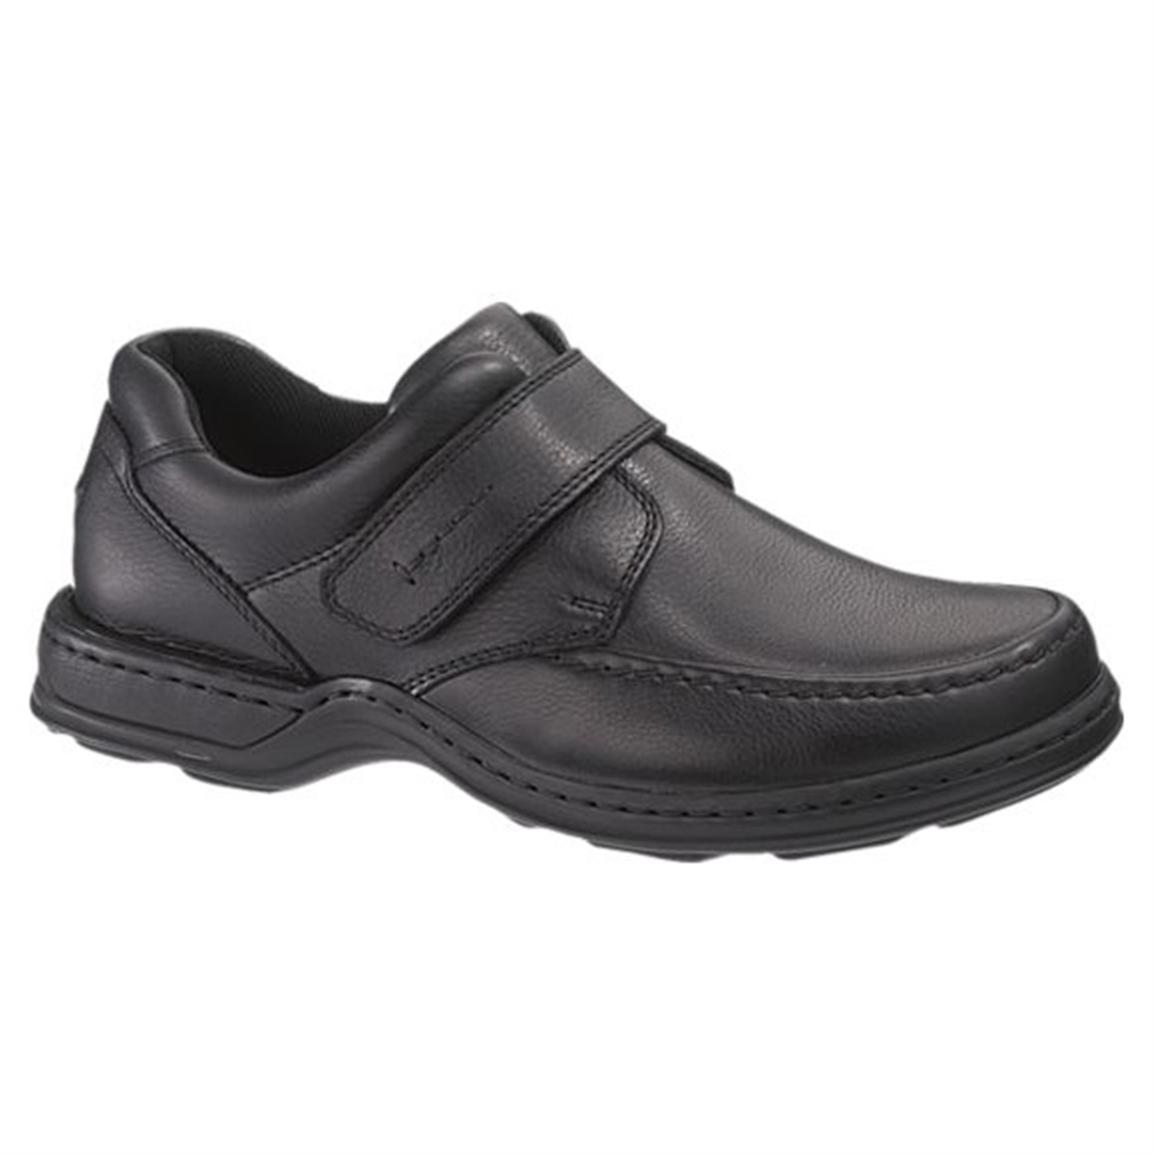 Men's Hush Puppies® Jeffrey Shoes - 164467, Casual Shoes at Sportsman's Guide